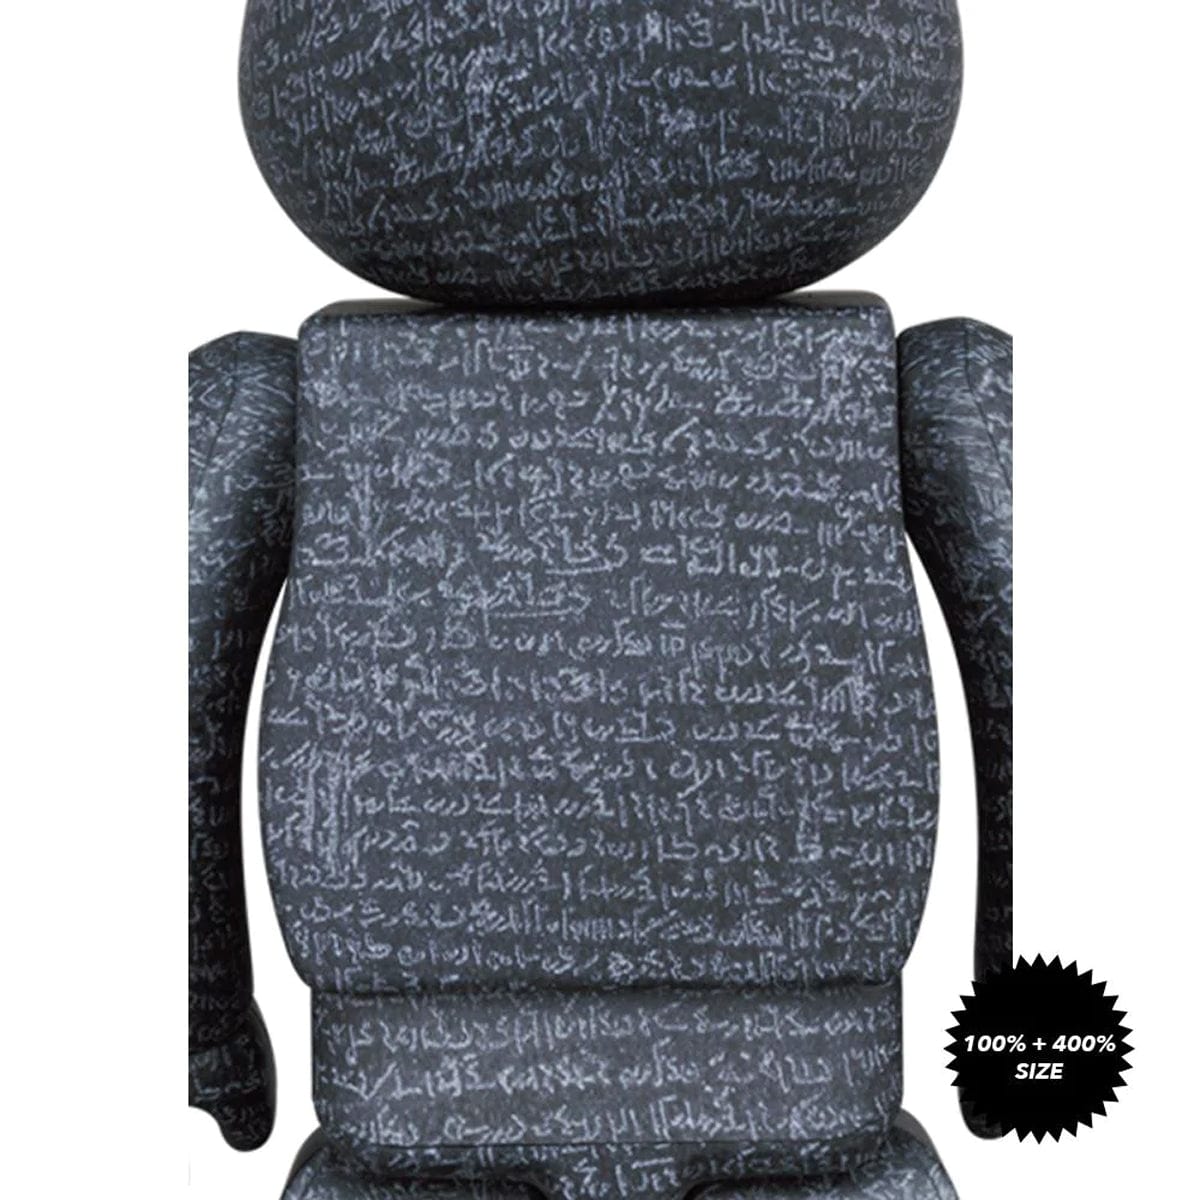 Rosetta Stone The British Museum 400% + 100% Bearbrick Combo by Medico